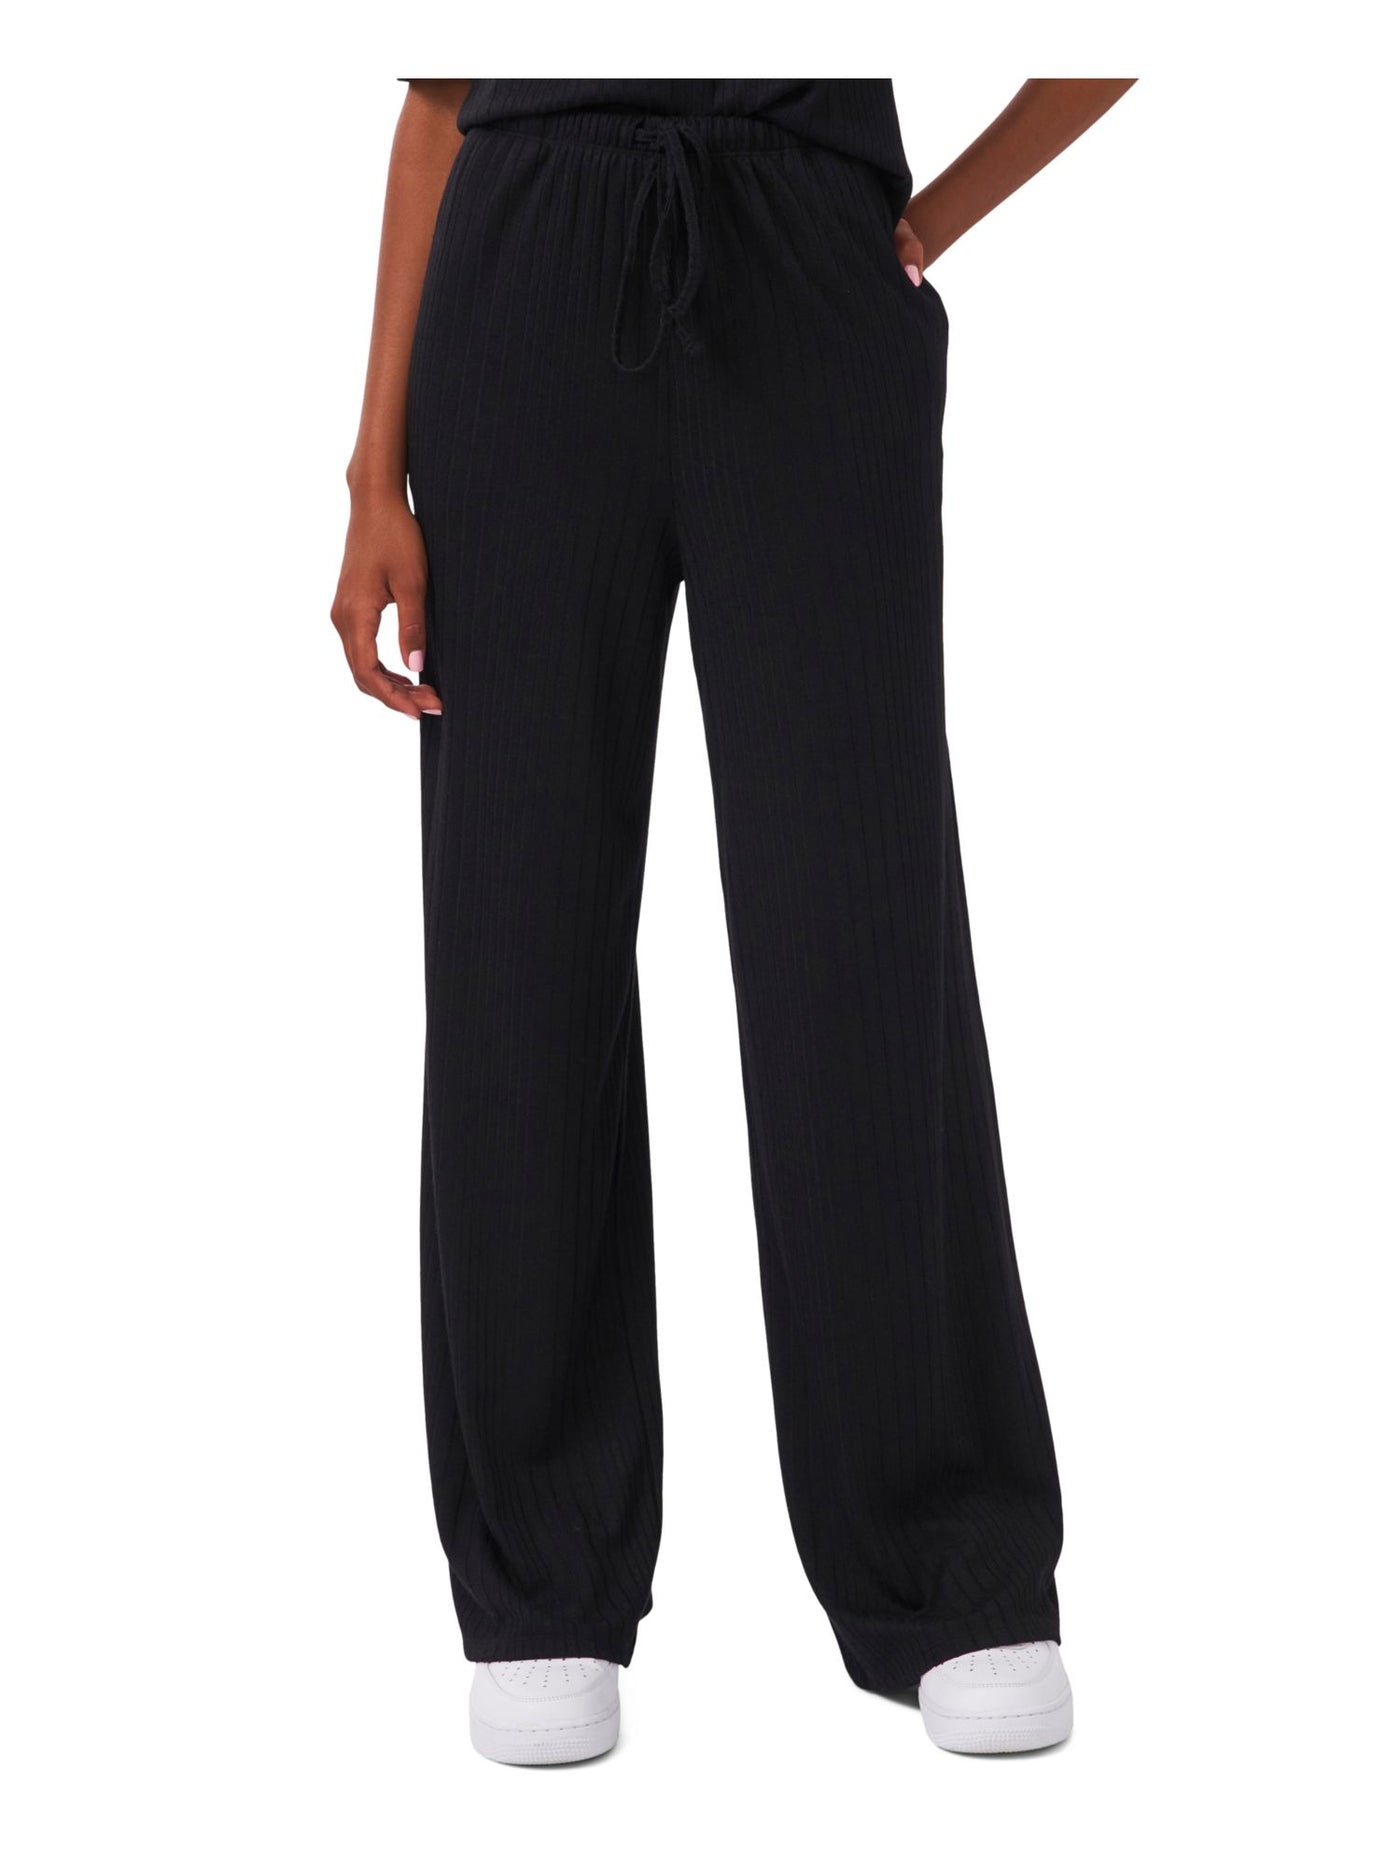 RILEY&RAE Womens Black Pocketed High Rise Drawstring Flare Pants XL